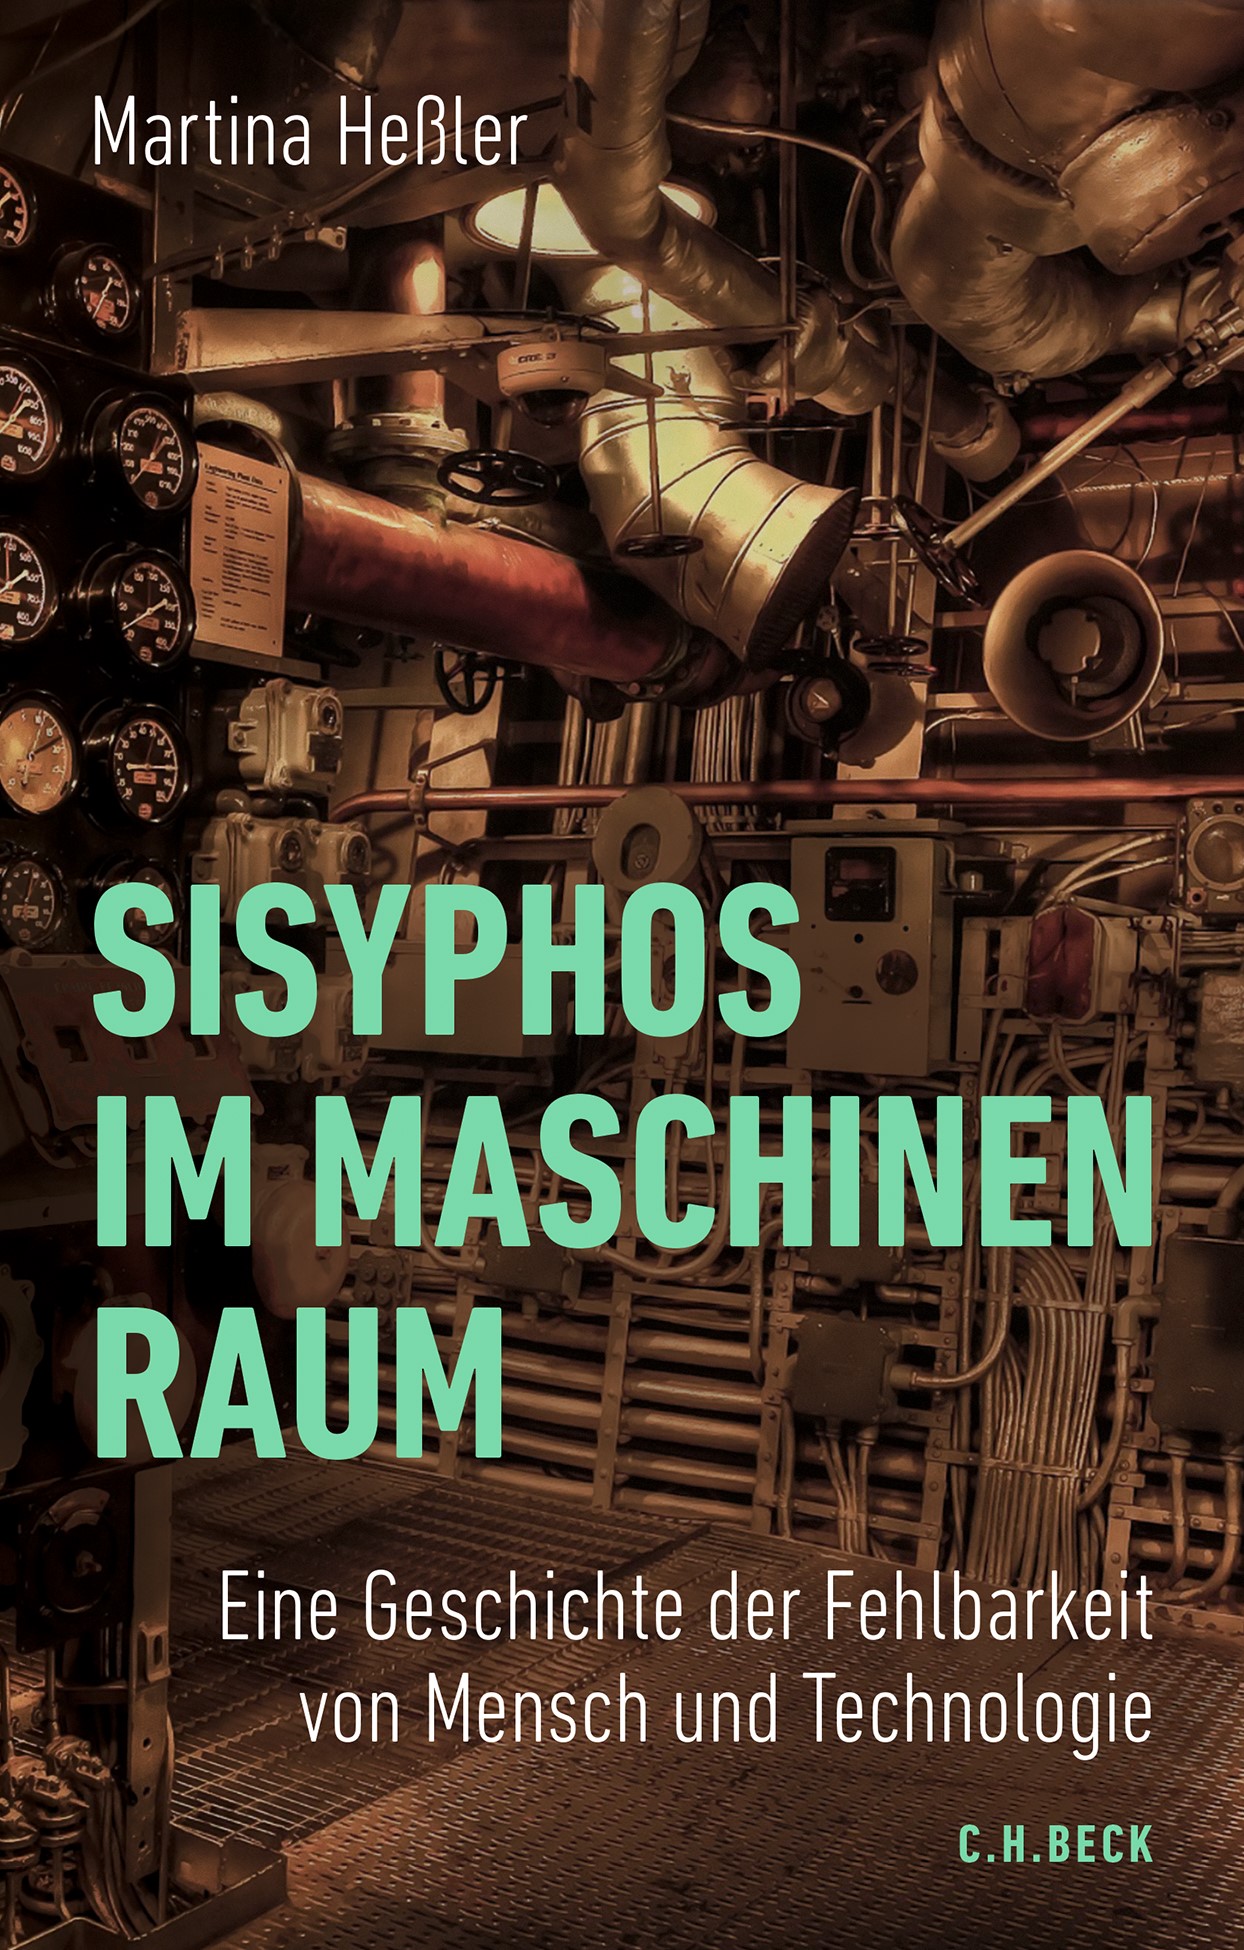 Cover: Heßler, Martina, Sisyphos im Maschinenraum